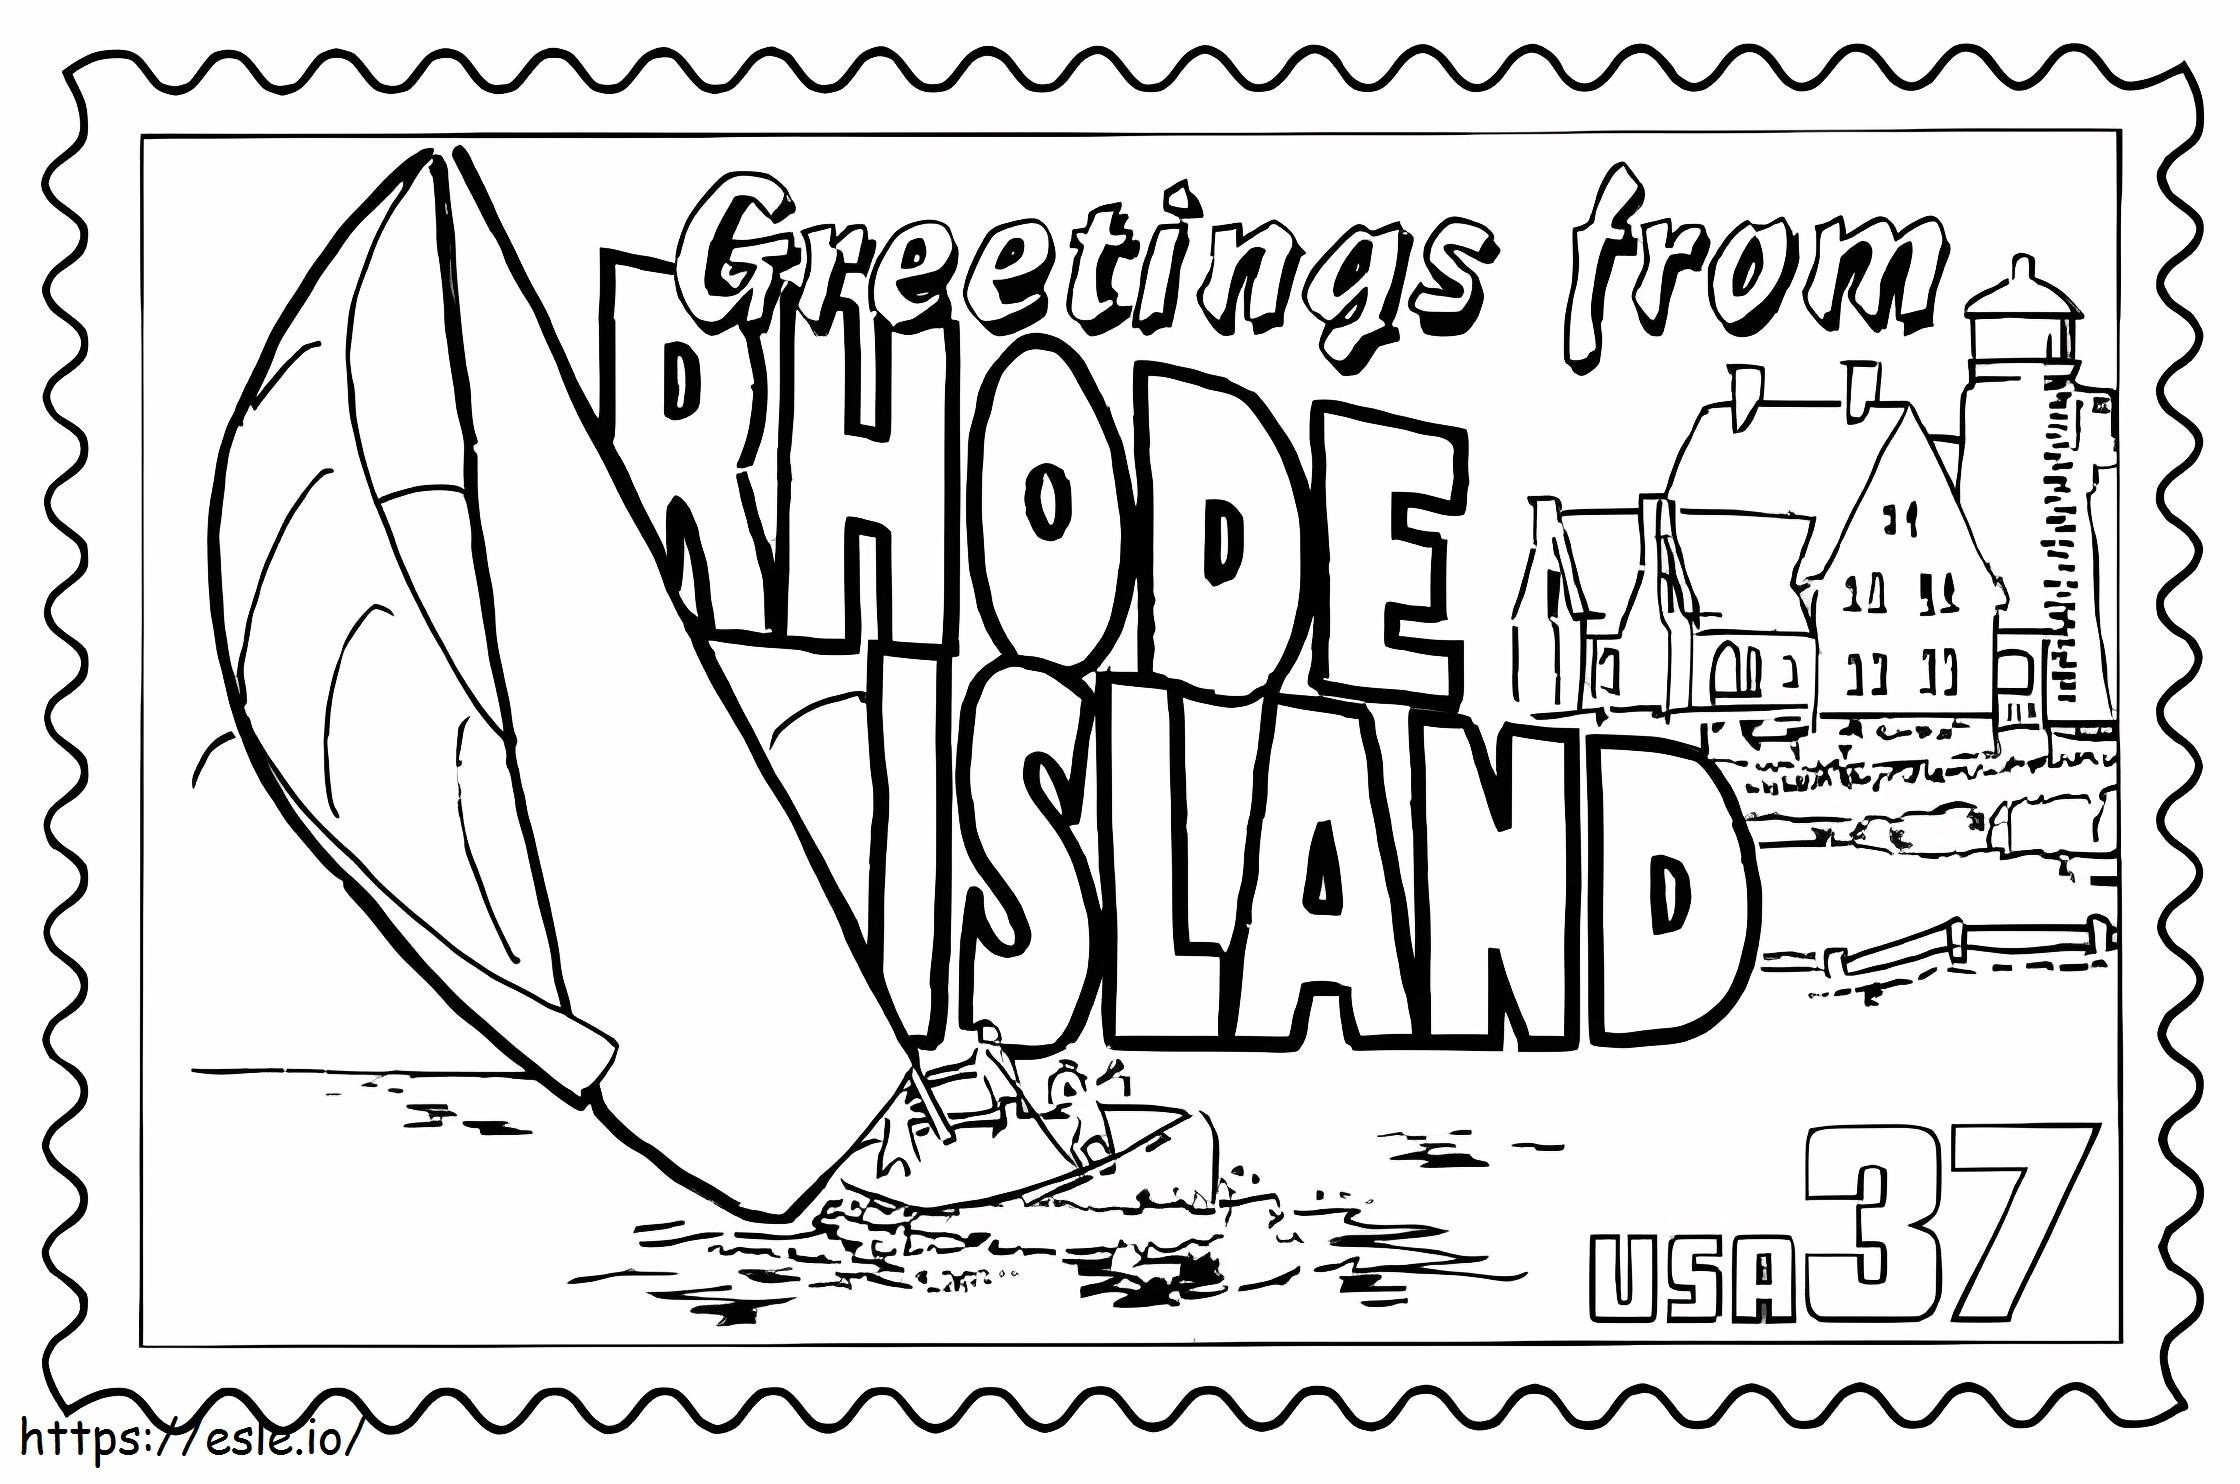 Rhode Island bélyegző kifestő